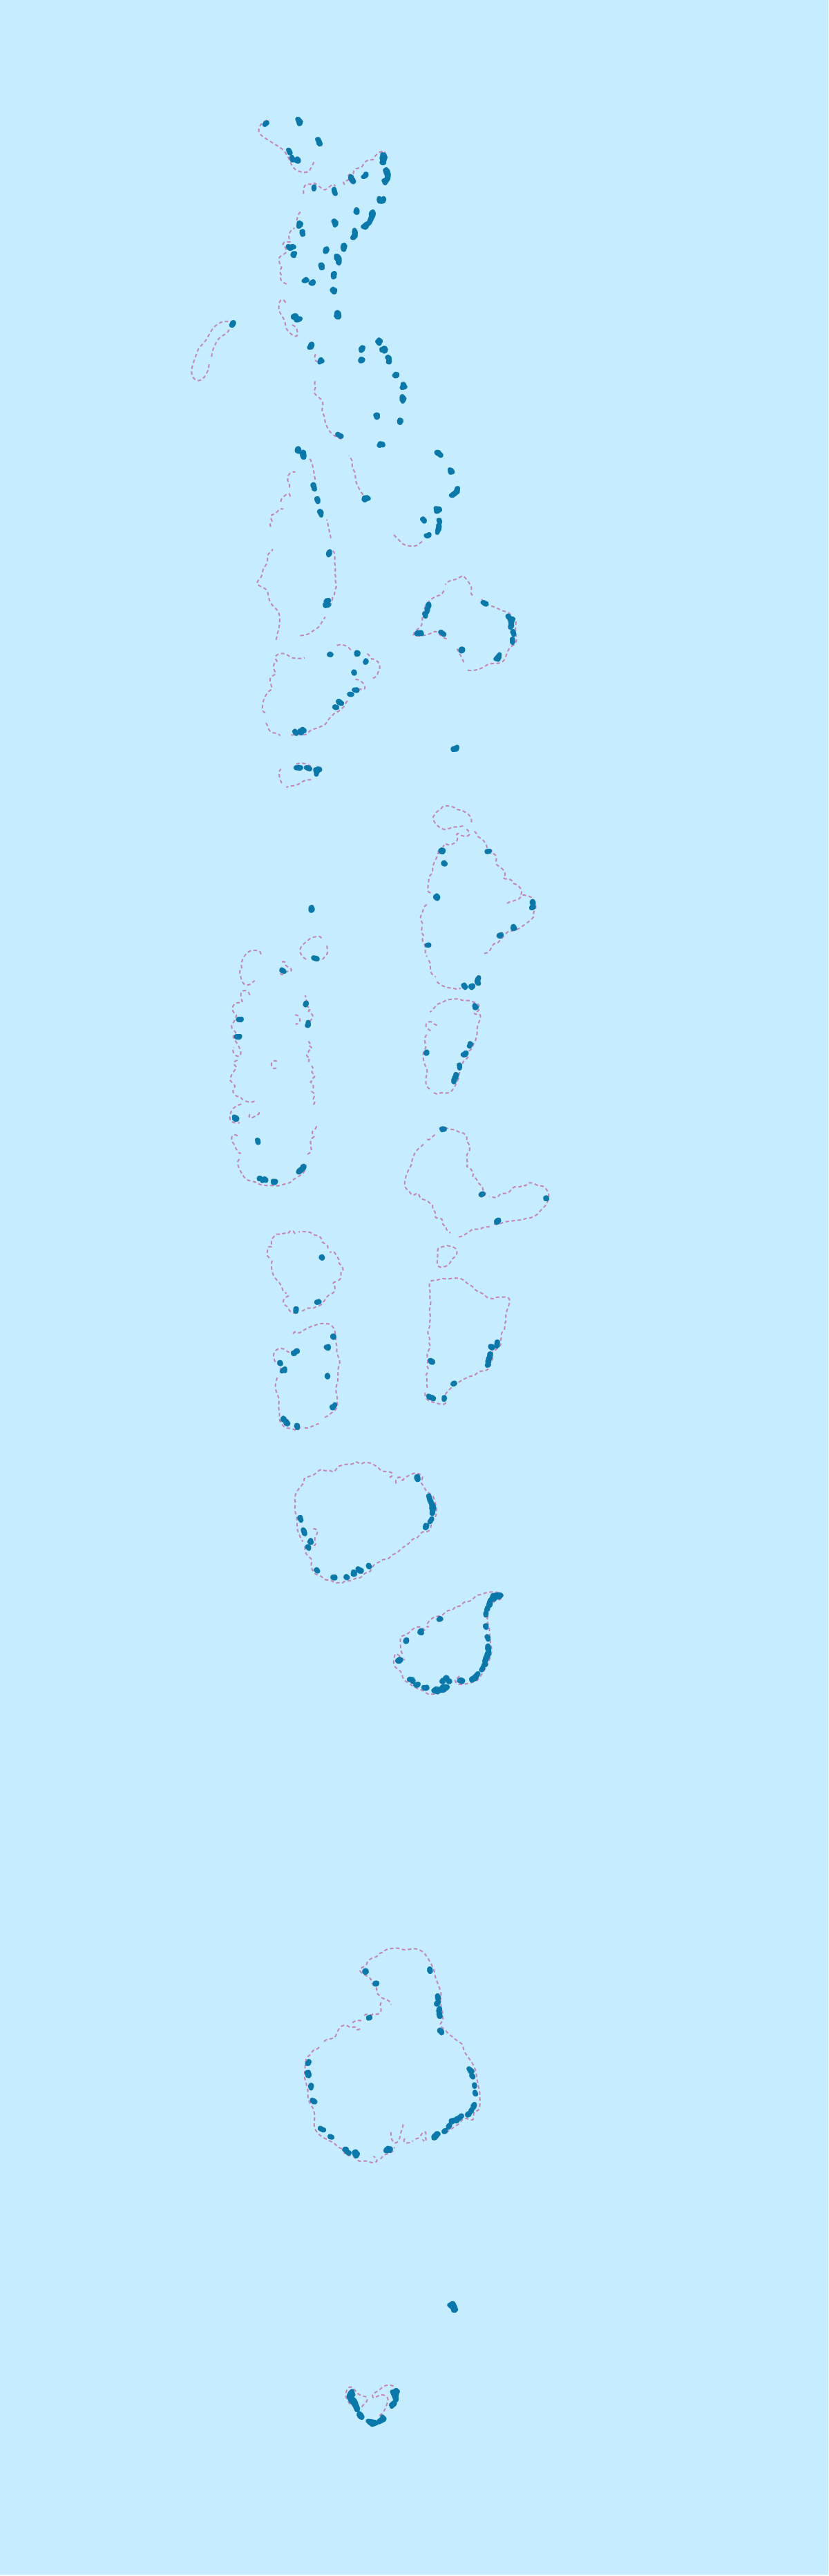 Maledives location map.svg